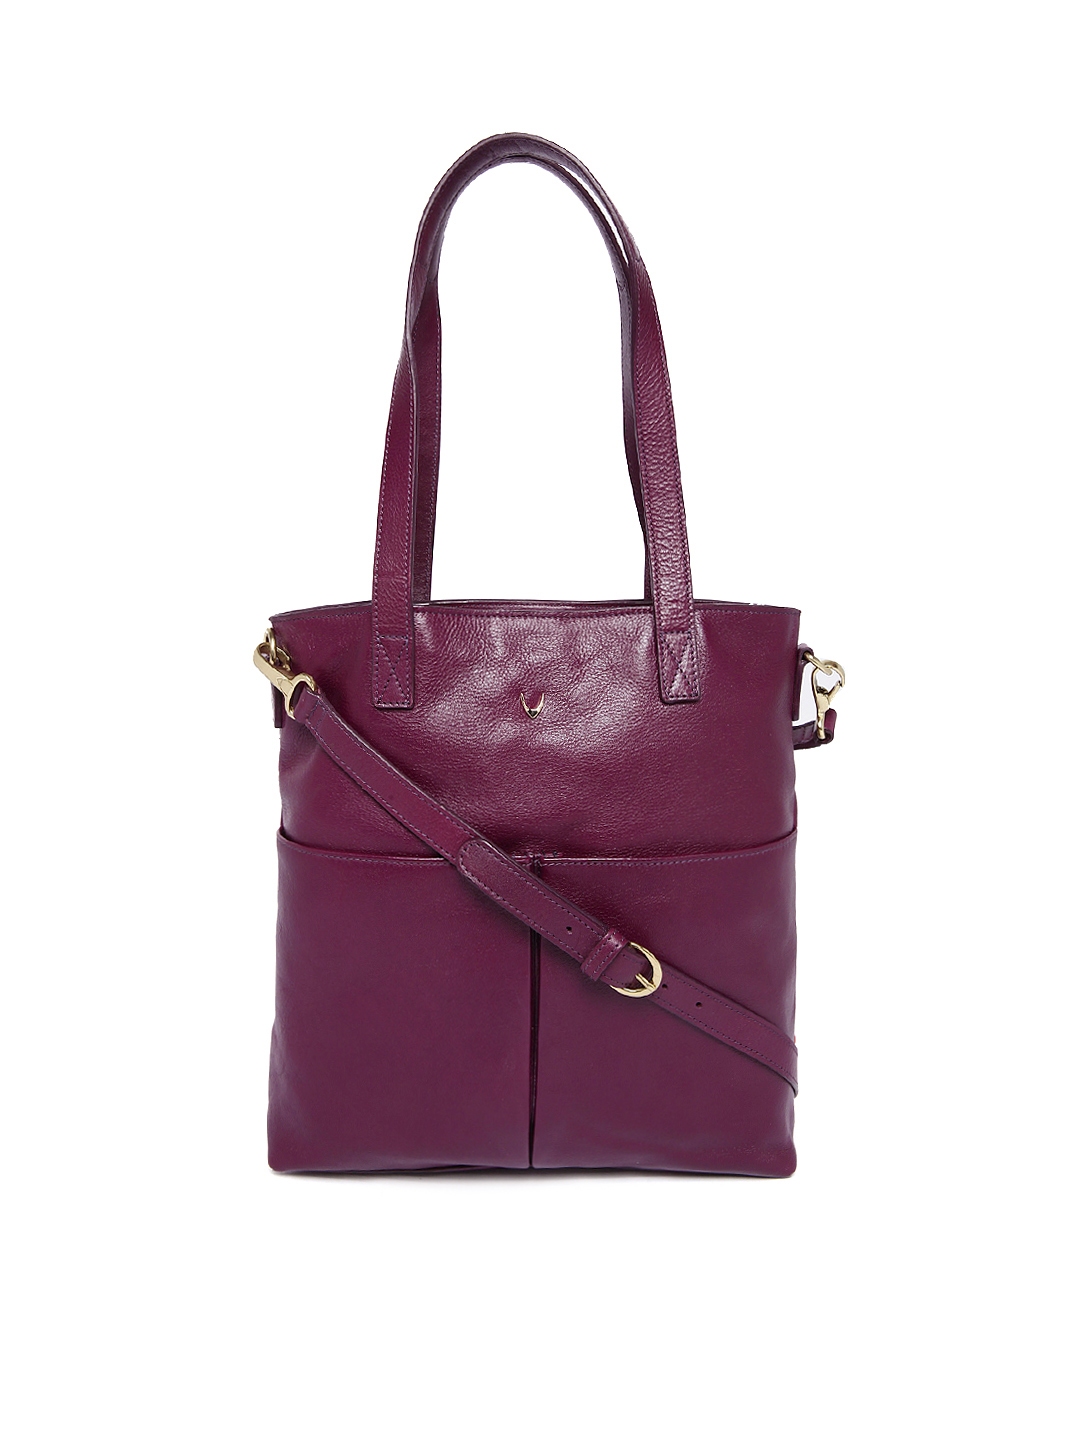 Buy Hidesign Purple Solid Leather Shoulder Bag - Handbags for Women 6785518 | Myntra